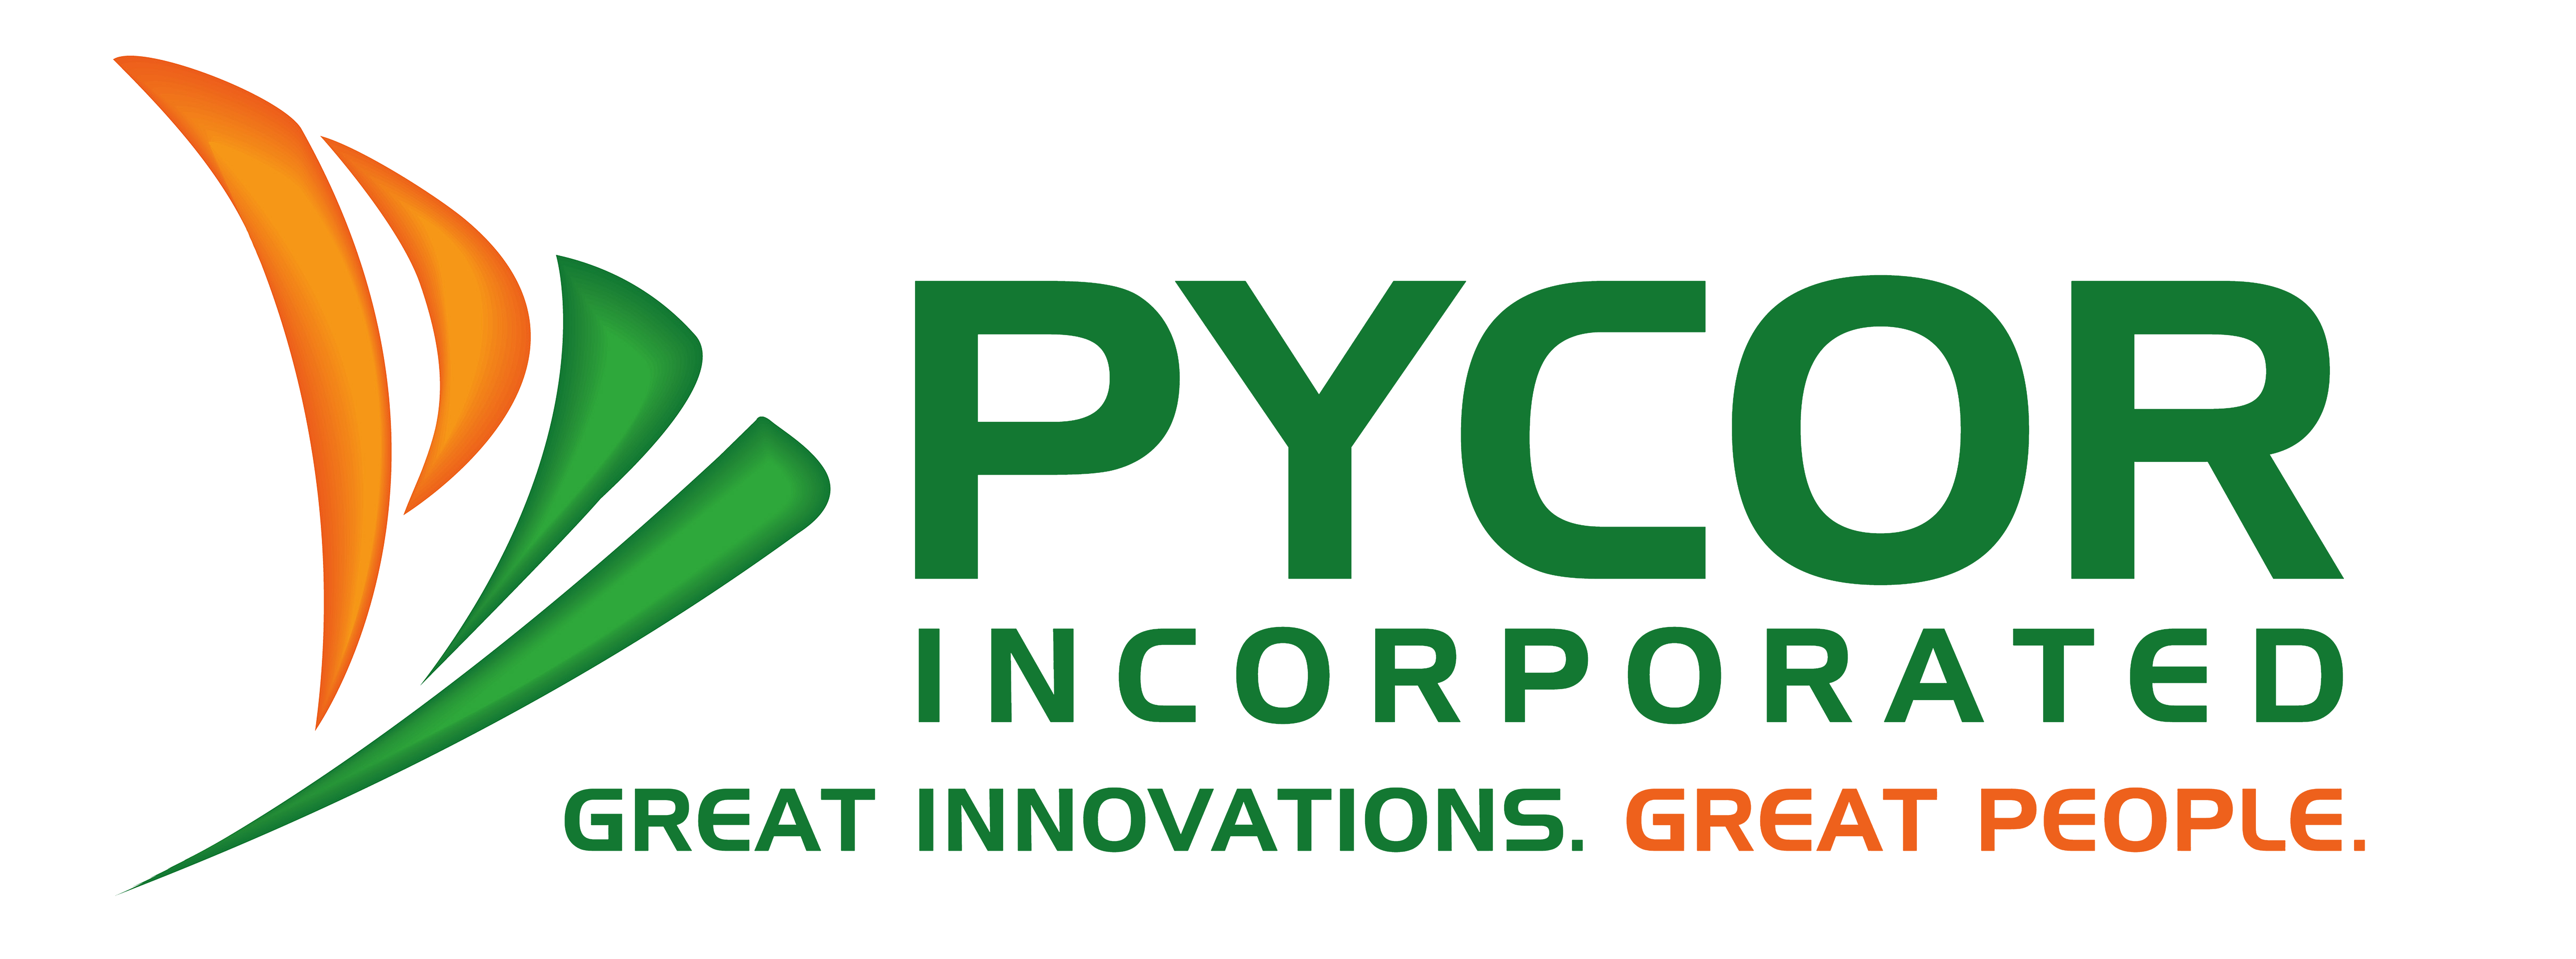 http://localhost/pycor/wp-content/uploads/2018/05/pycor-logo.png 5850w, http://localhost/pycor/wp-content/uploads/2018/05/pycor-logo-300x112.png 300w, http://localhost/pycor/wp-content/uploads/2018/05/pycor-logo-768x286.png 768w, http://localhost/pycor/wp-content/uploads/2018/05/pycor-logo-1024x381.png 1024w